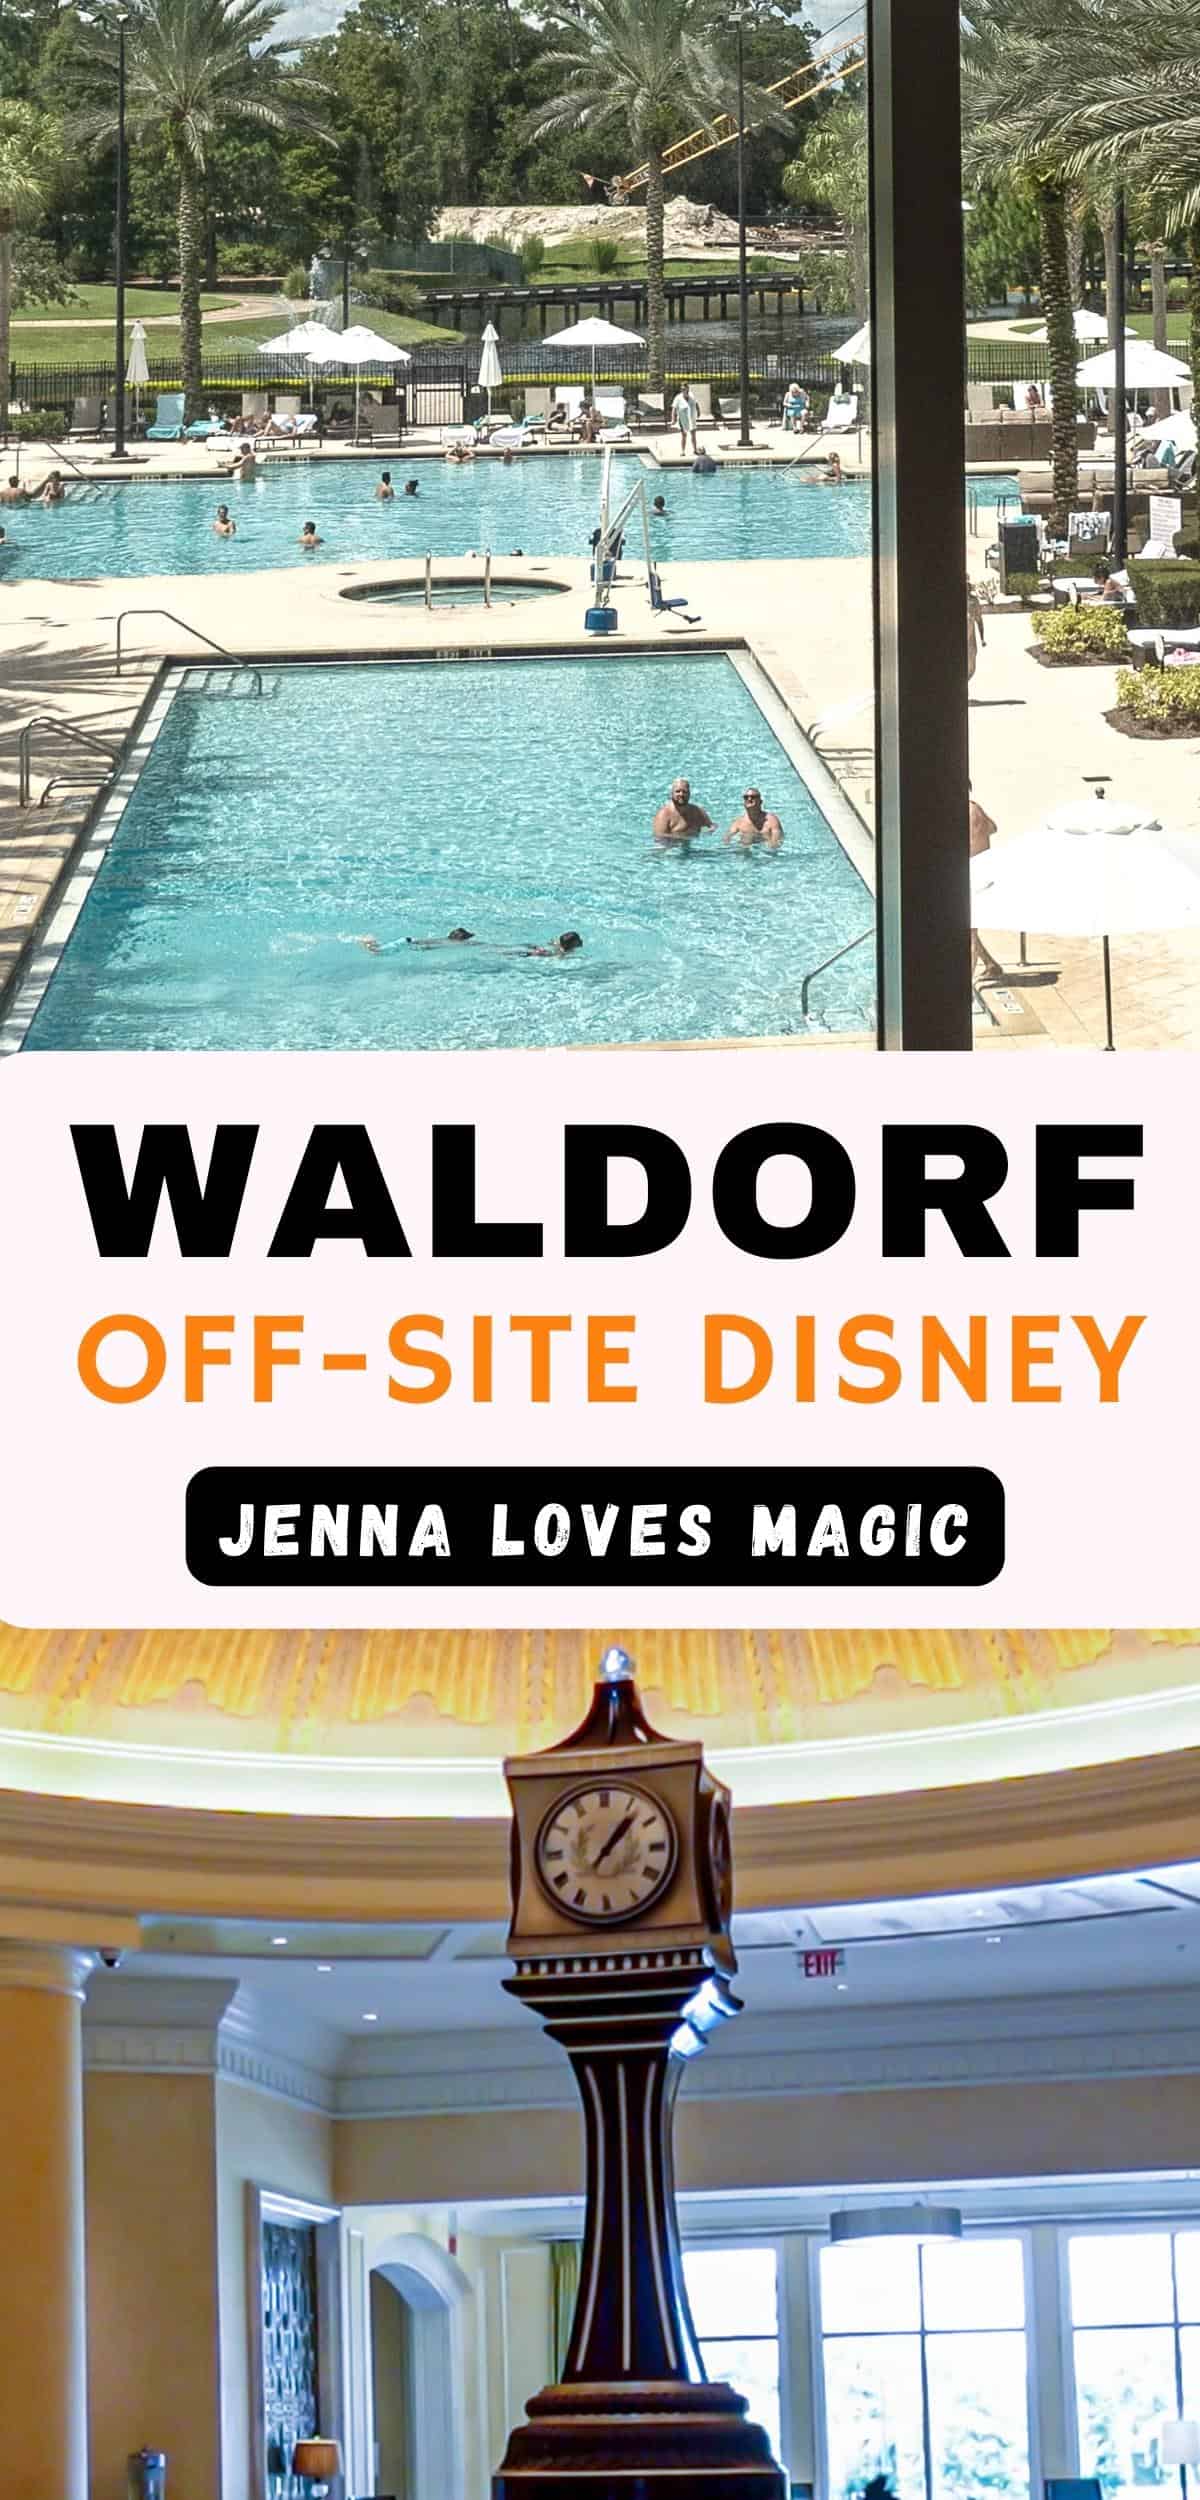 Waldorf Astoria Orlando Hotel Offsite Disney World photos with text overlay and Jenna Loves Magic logo